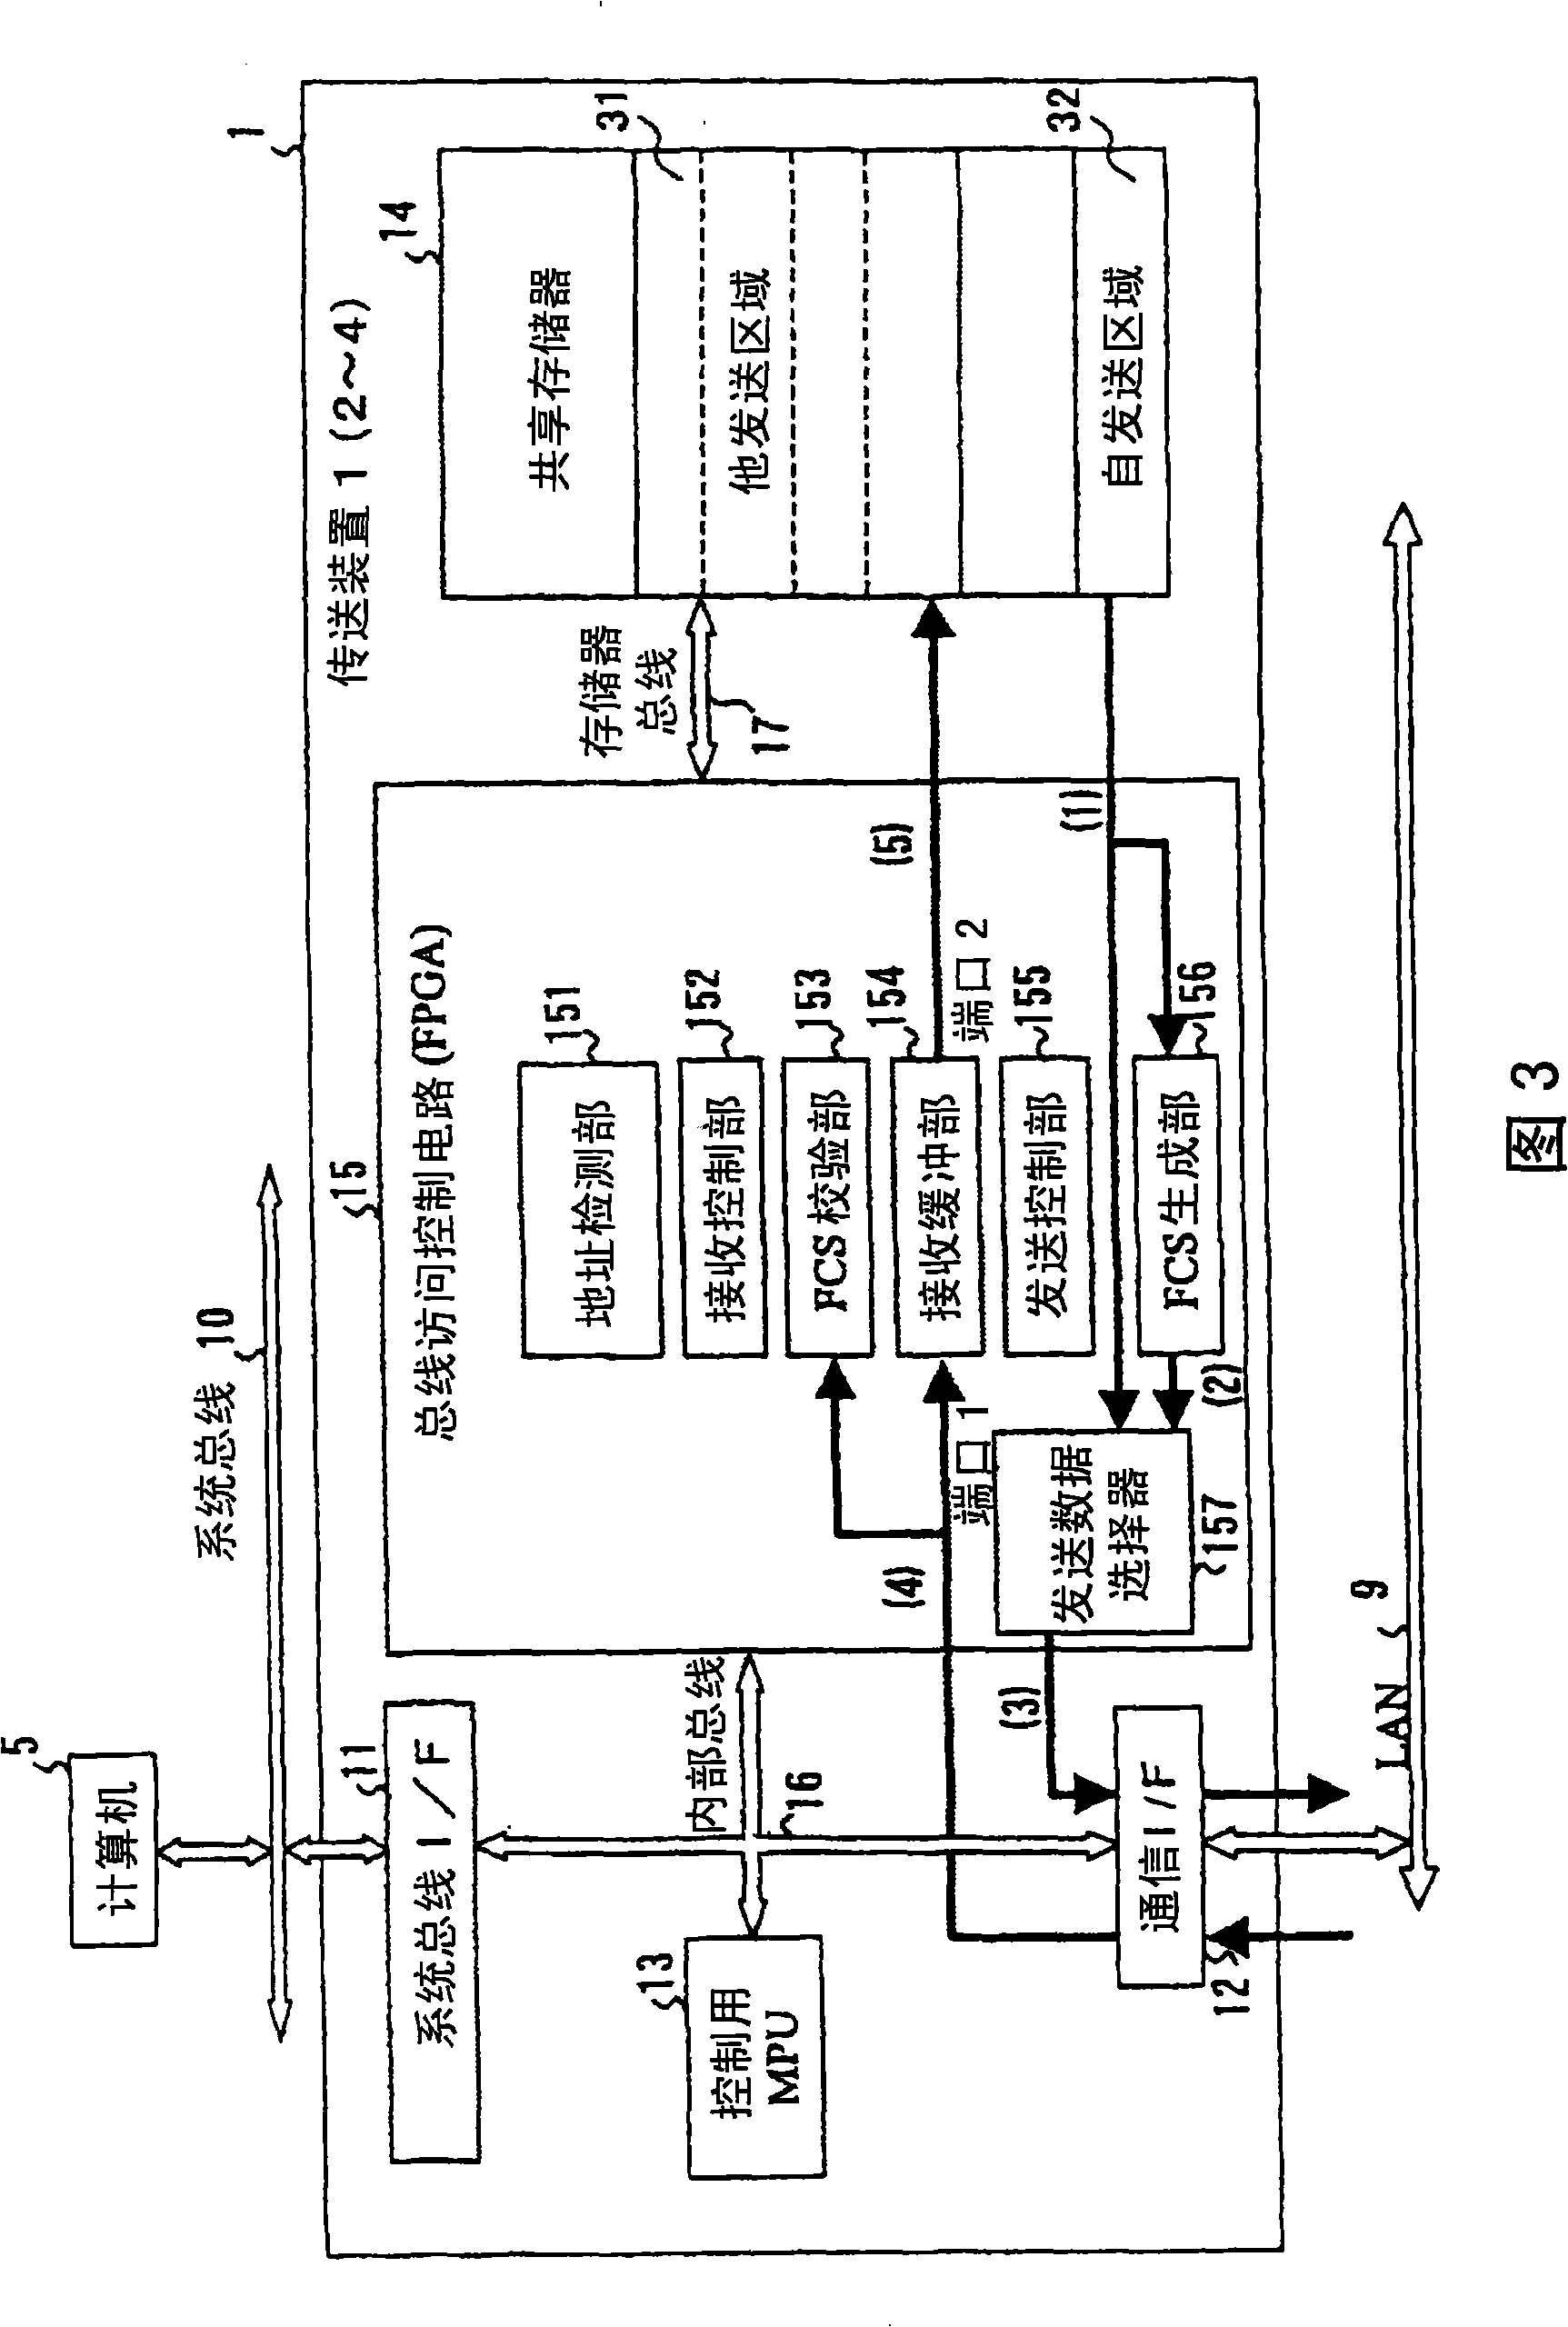 Transmission apparatus, transmission system and data transmission method